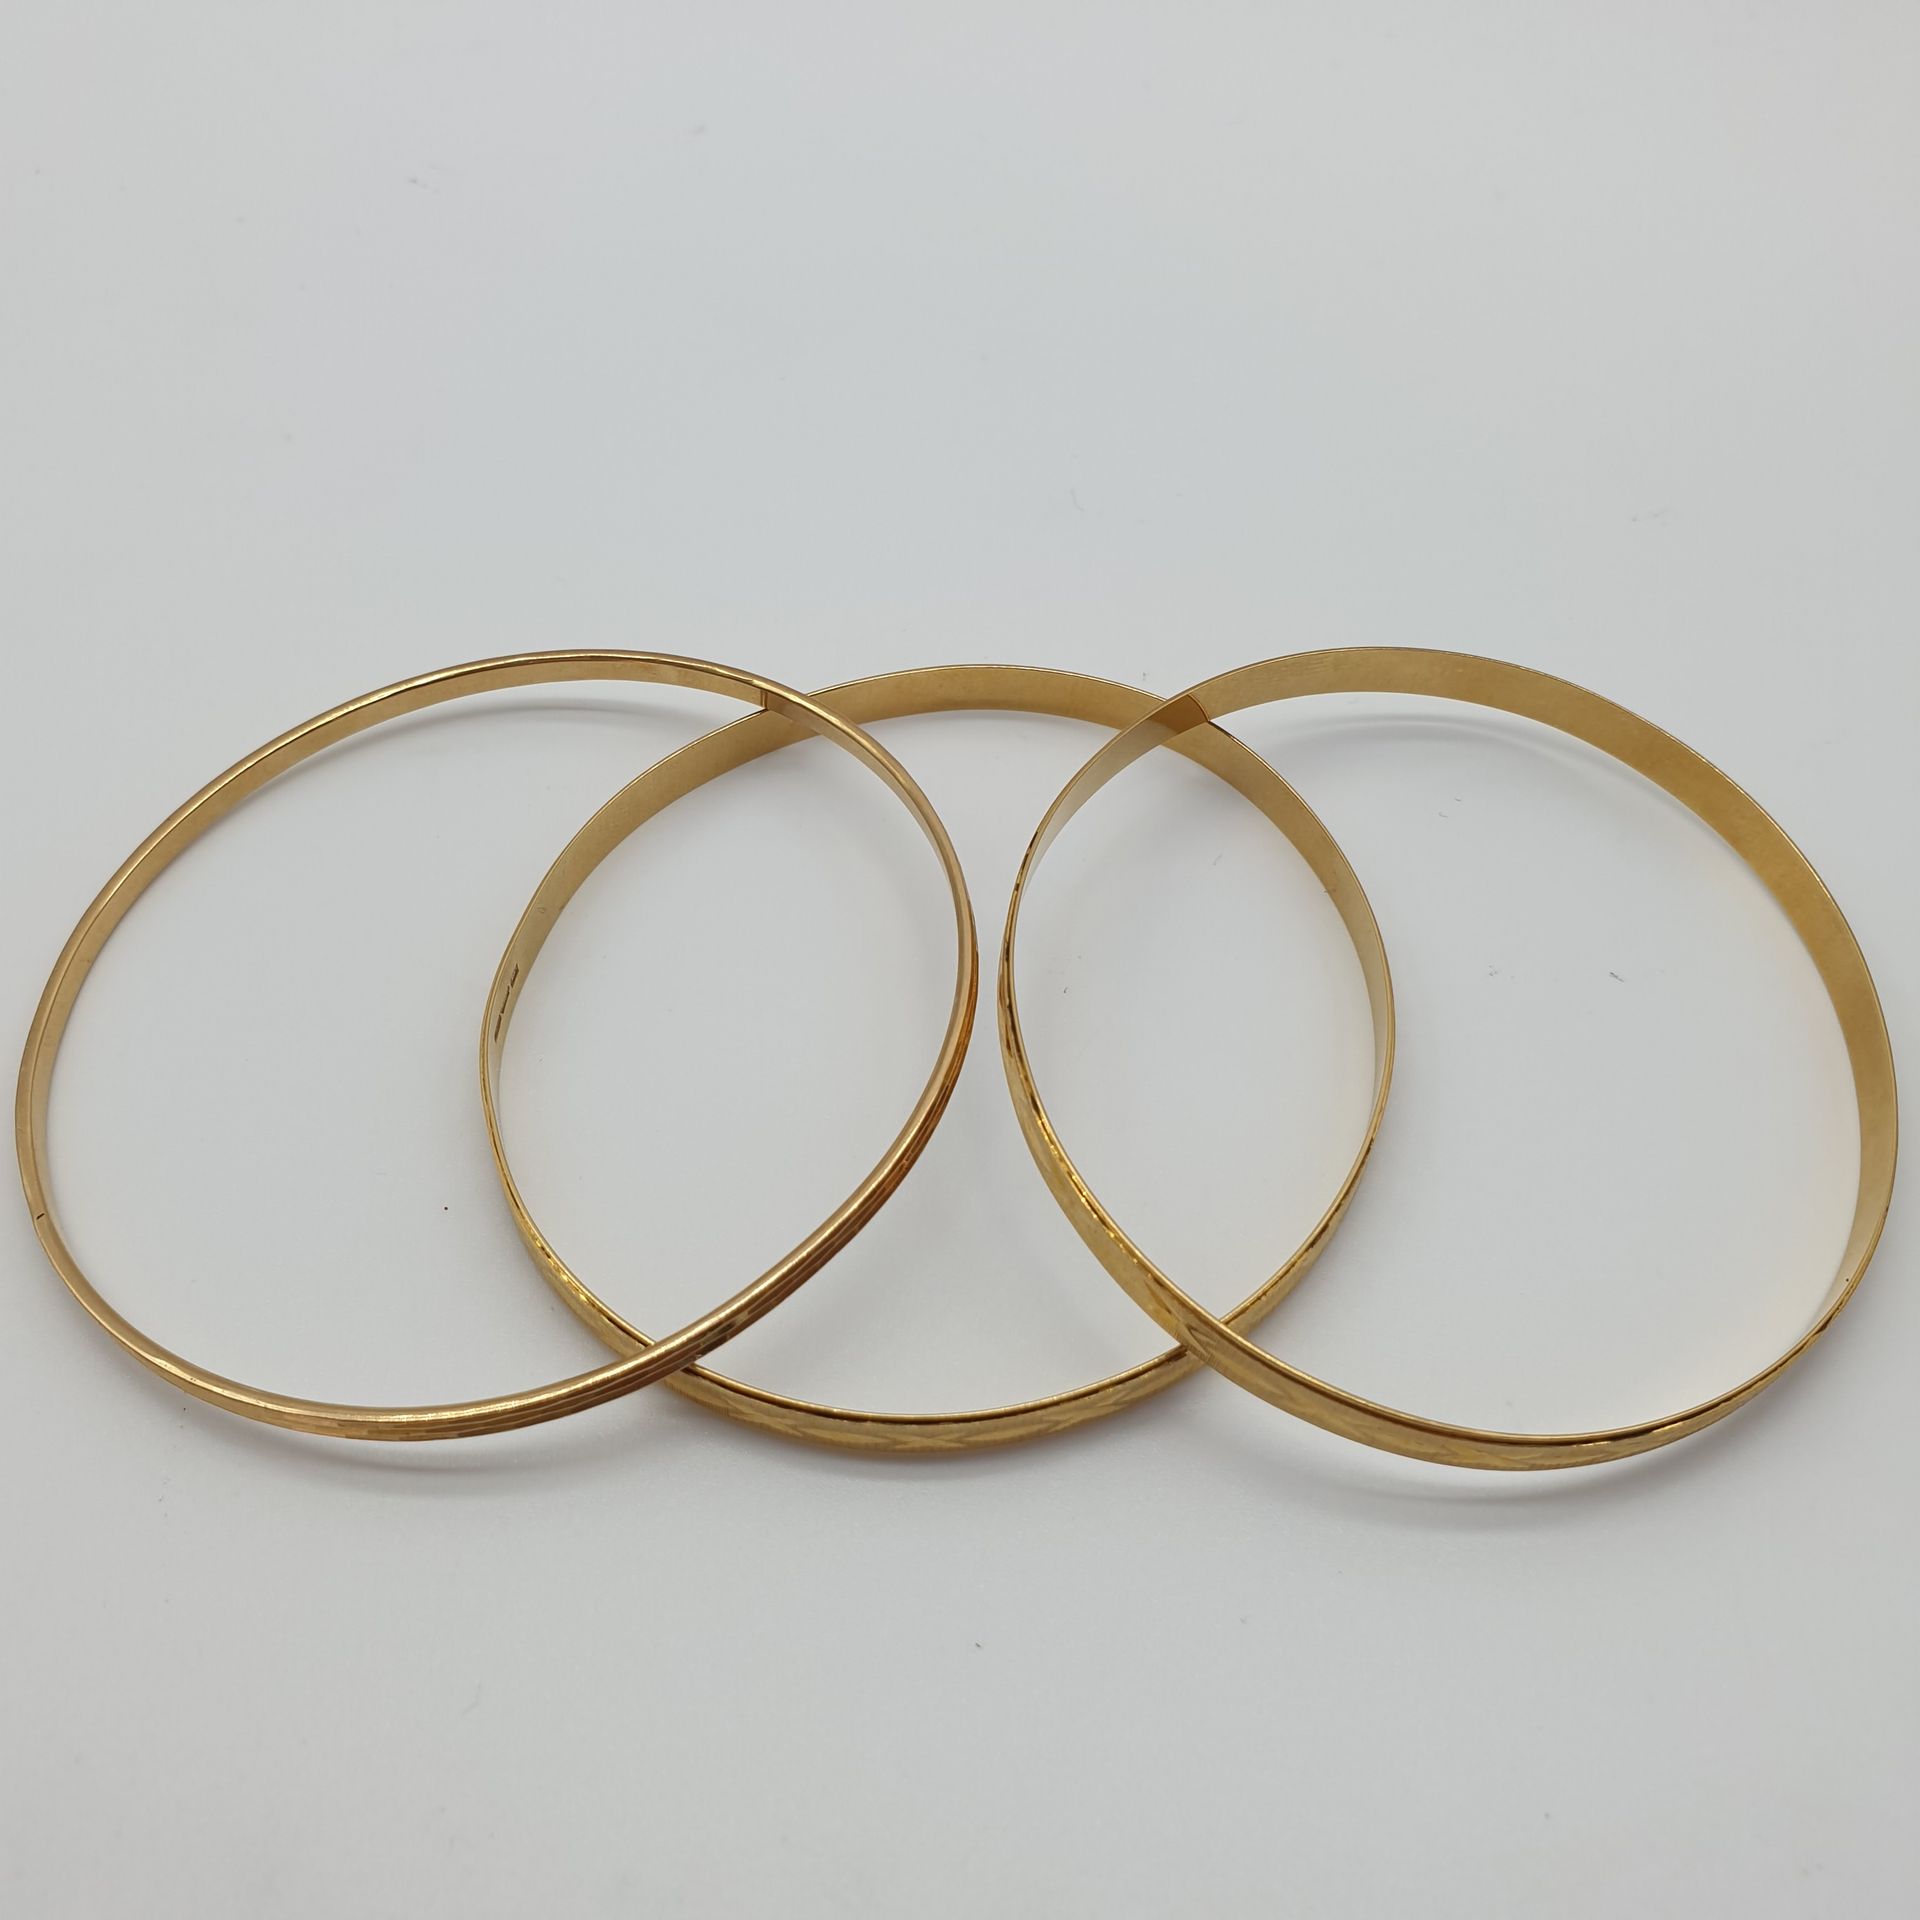 Null TRES pulseras de oro amarillo 750° con anillos de oro

peso : 26,99 g